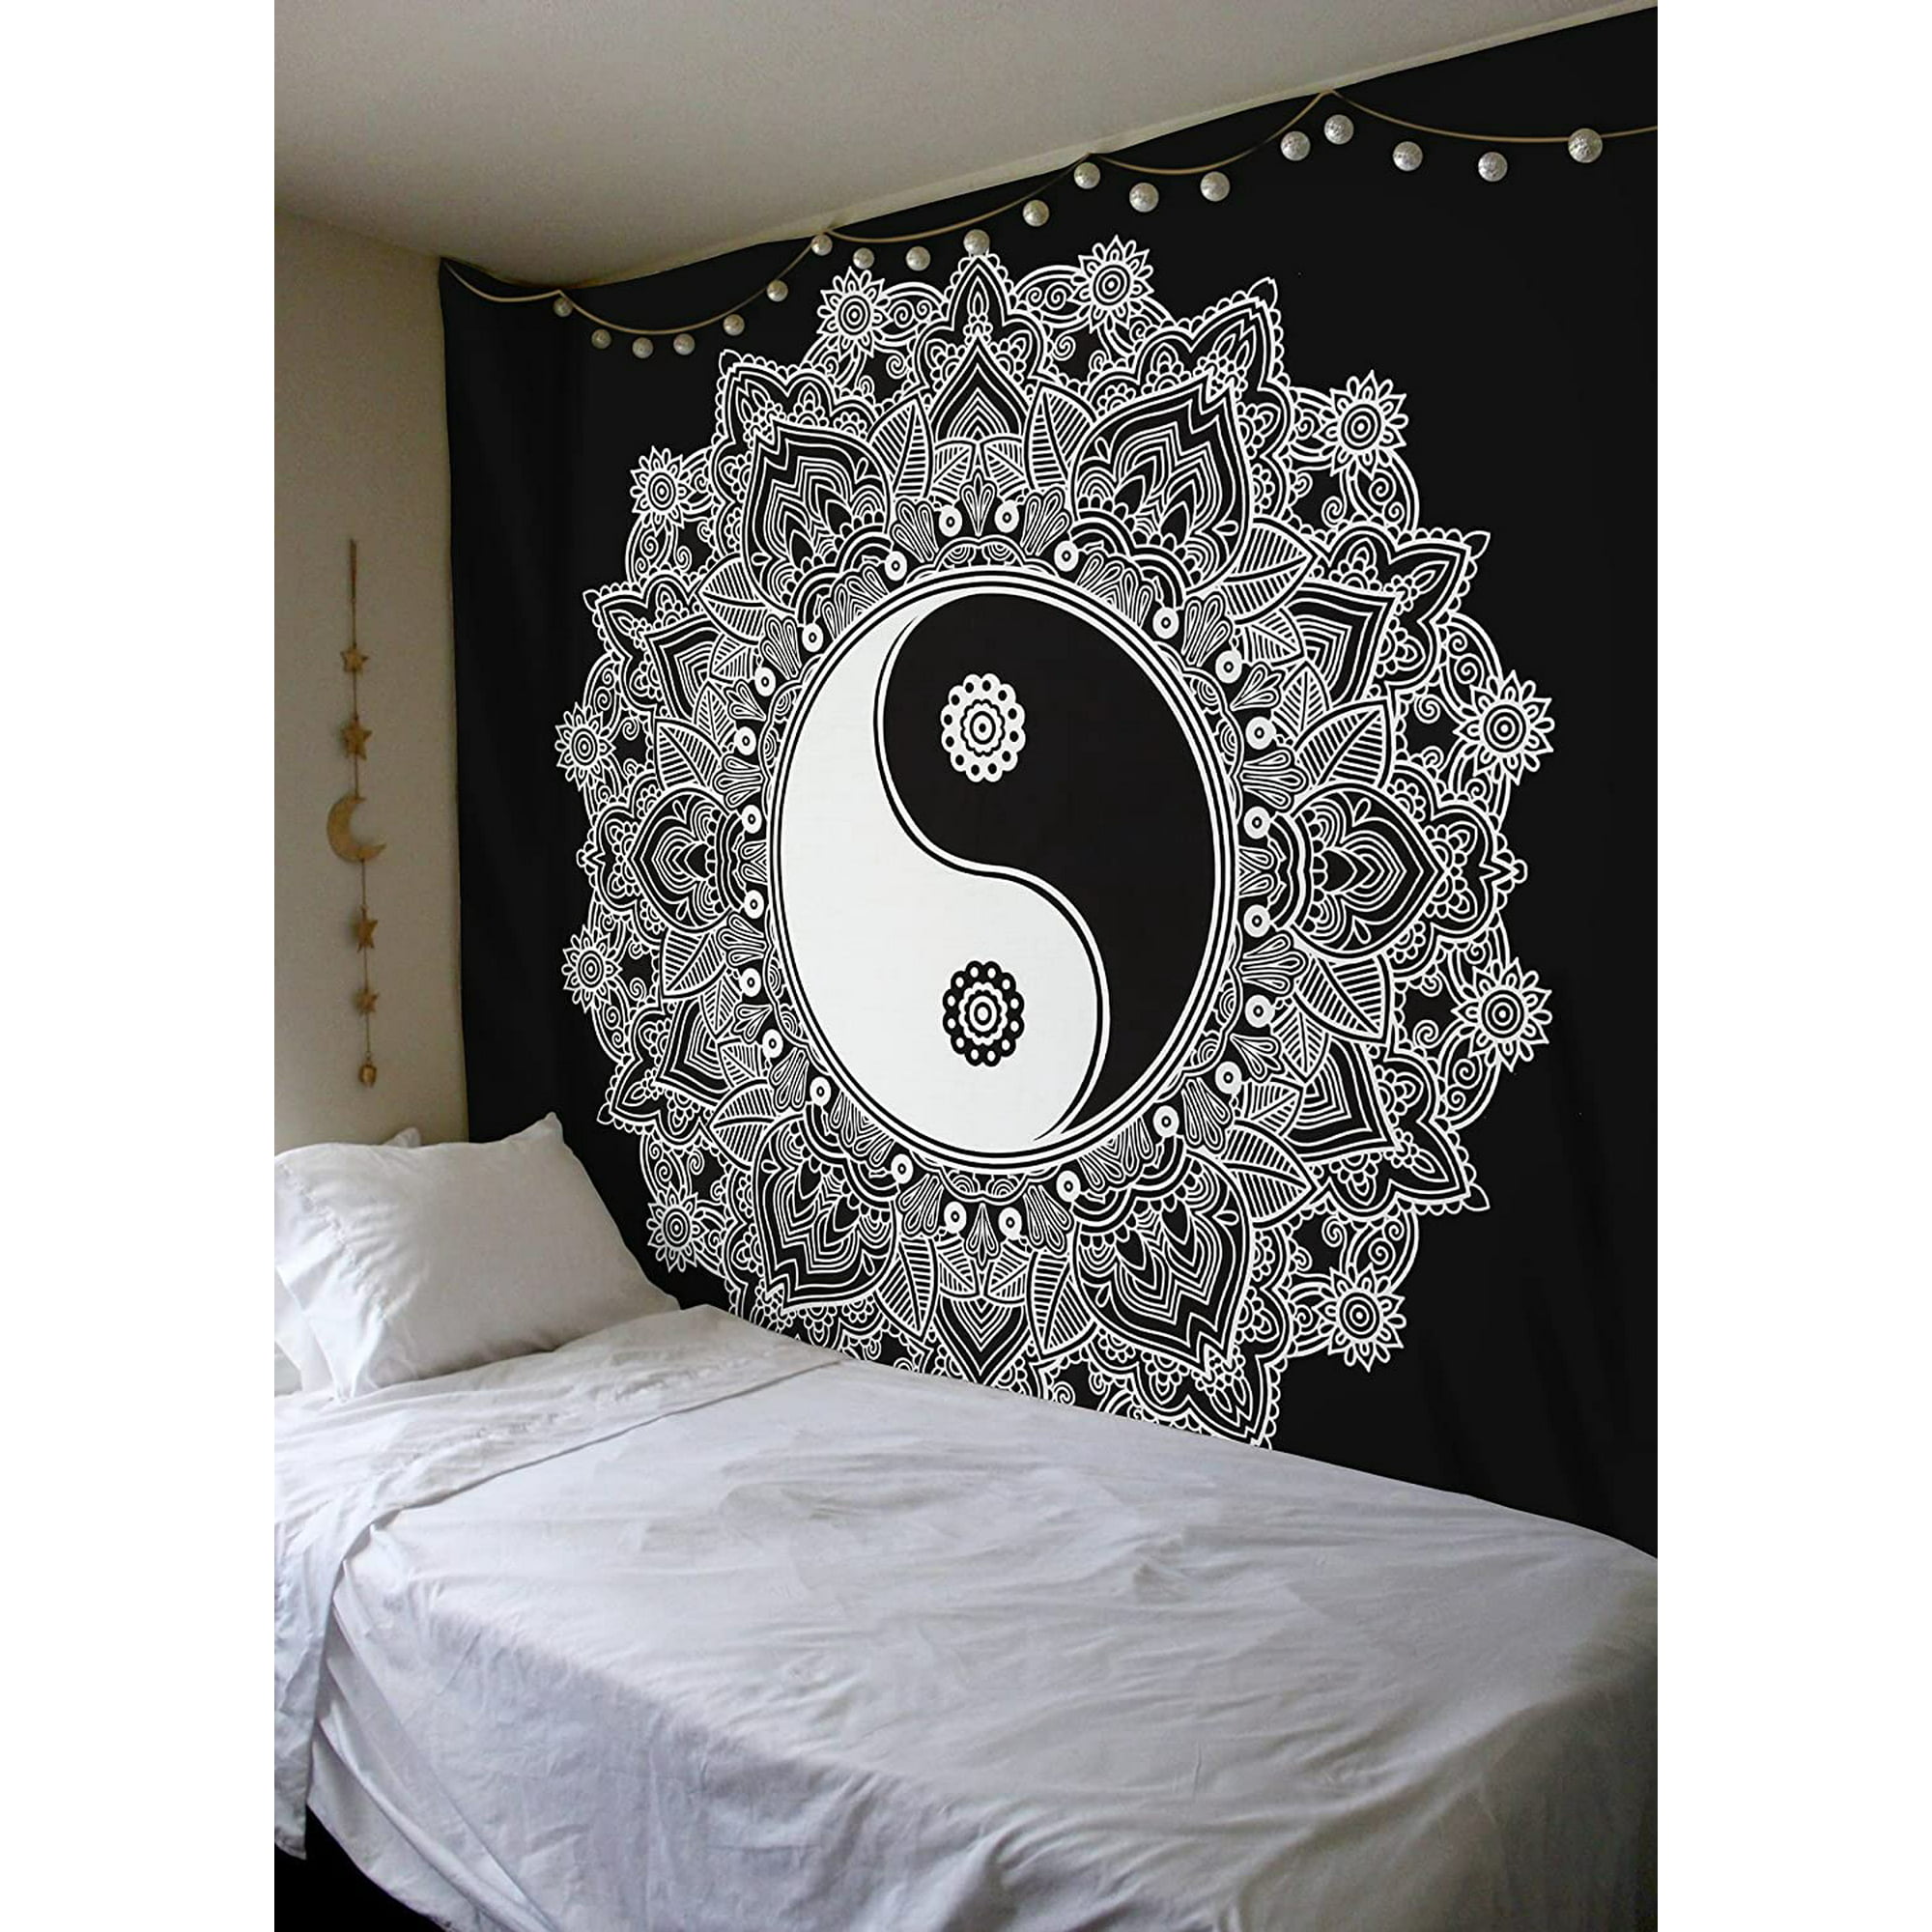 Tapestry Yoga Mat Wall Hanging Yin Yang Decor Indian Mandala Hippie Poster Throw